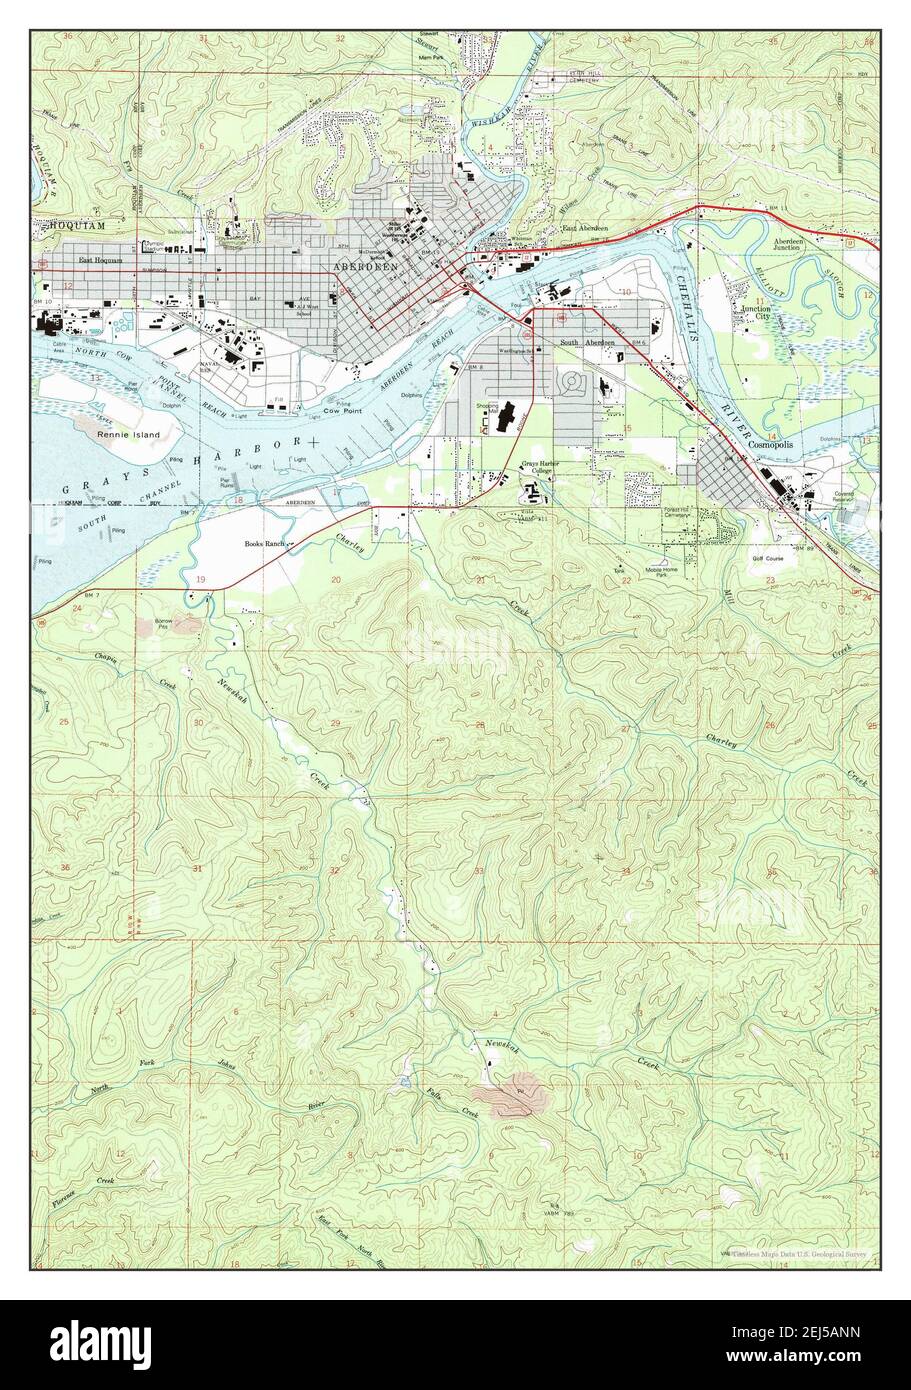 Aberdeen, Washington, map 1957, 1:24000, United States of America by Timeless Maps, data U.S. Geological Survey Foto Stock